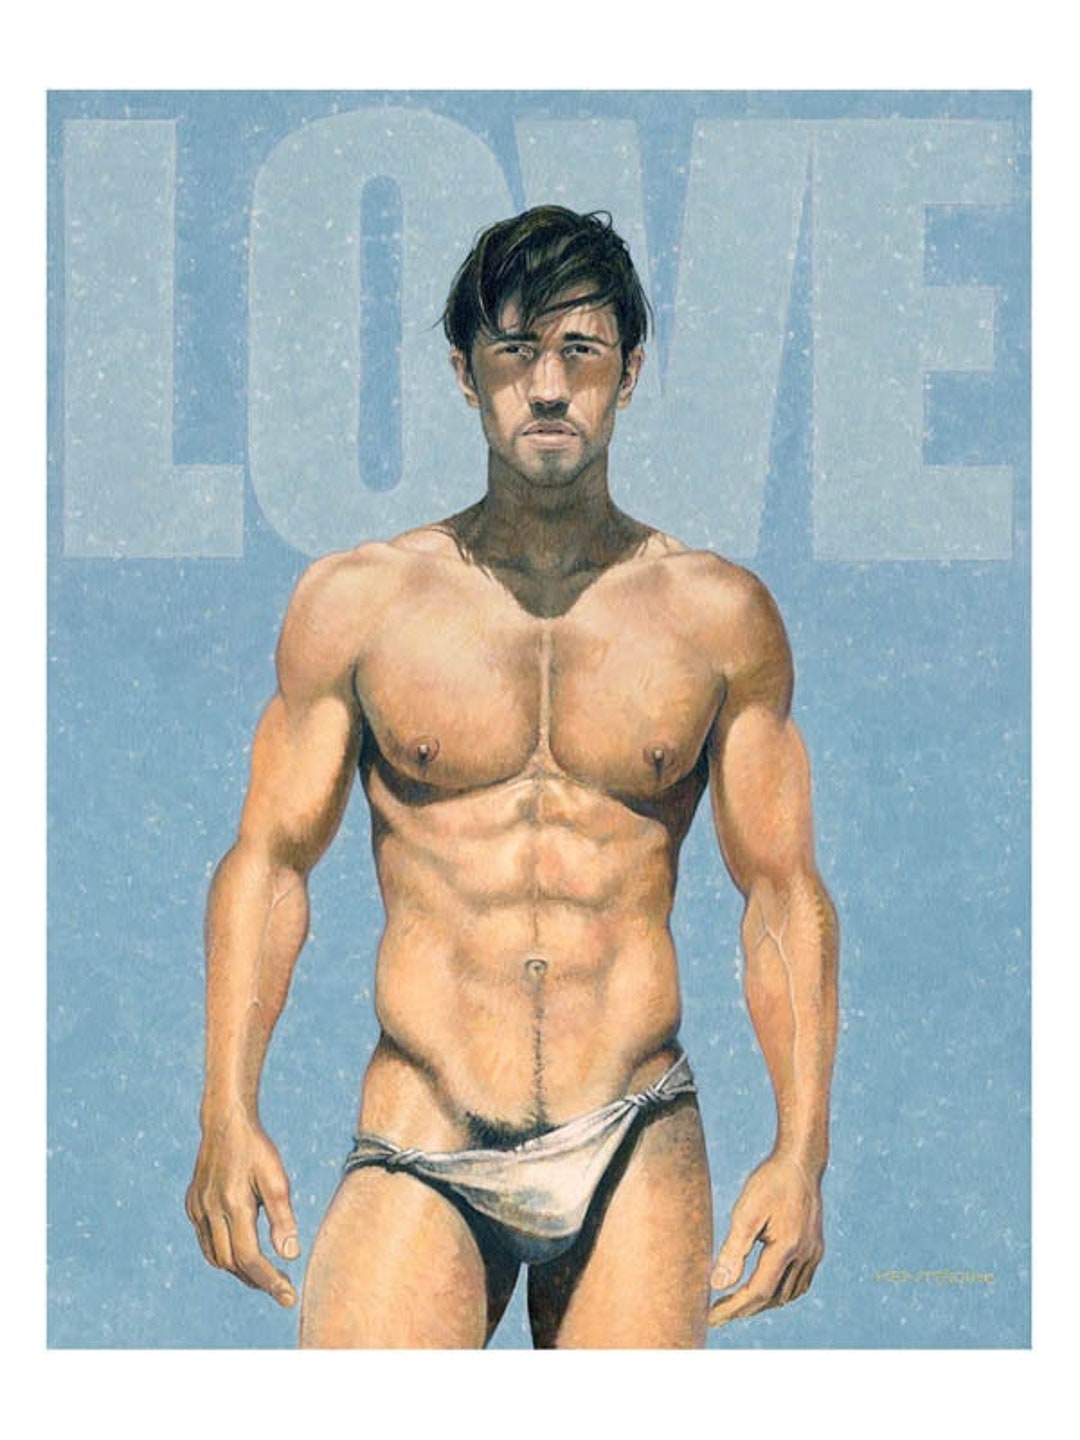 BLUE LOVE Male Nude Gay Man Men Adult Adults Portrait